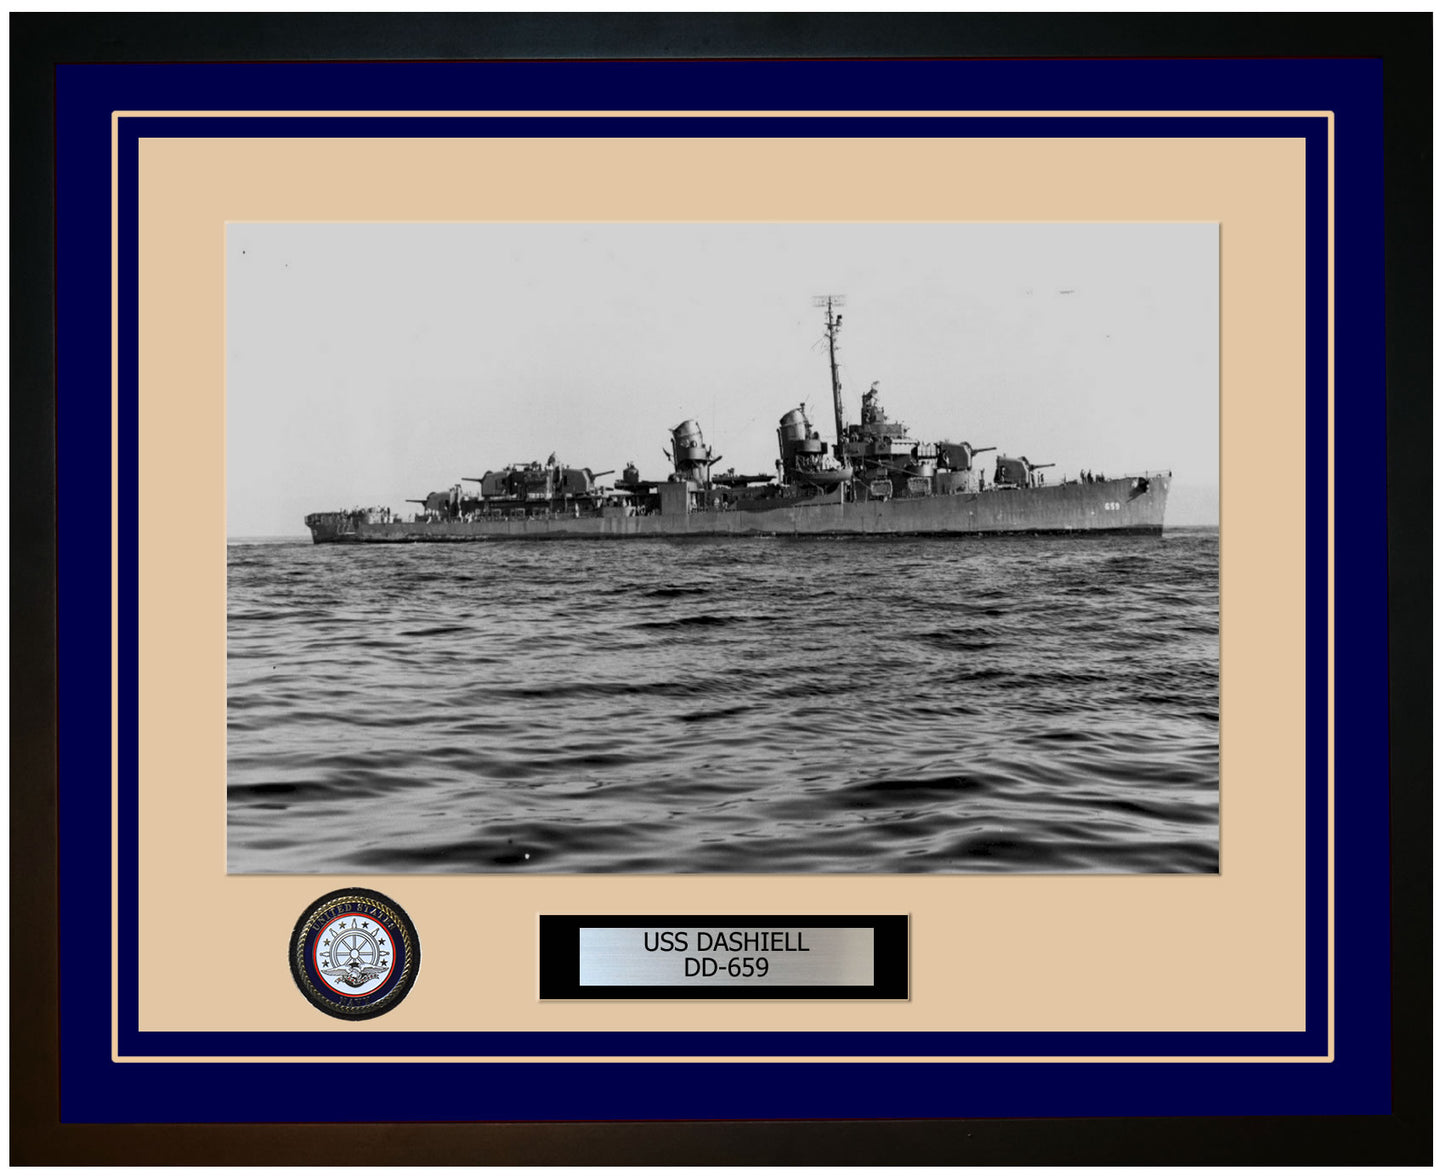 USS DASHIELL DD-659 Framed Navy Ship Photo Blue